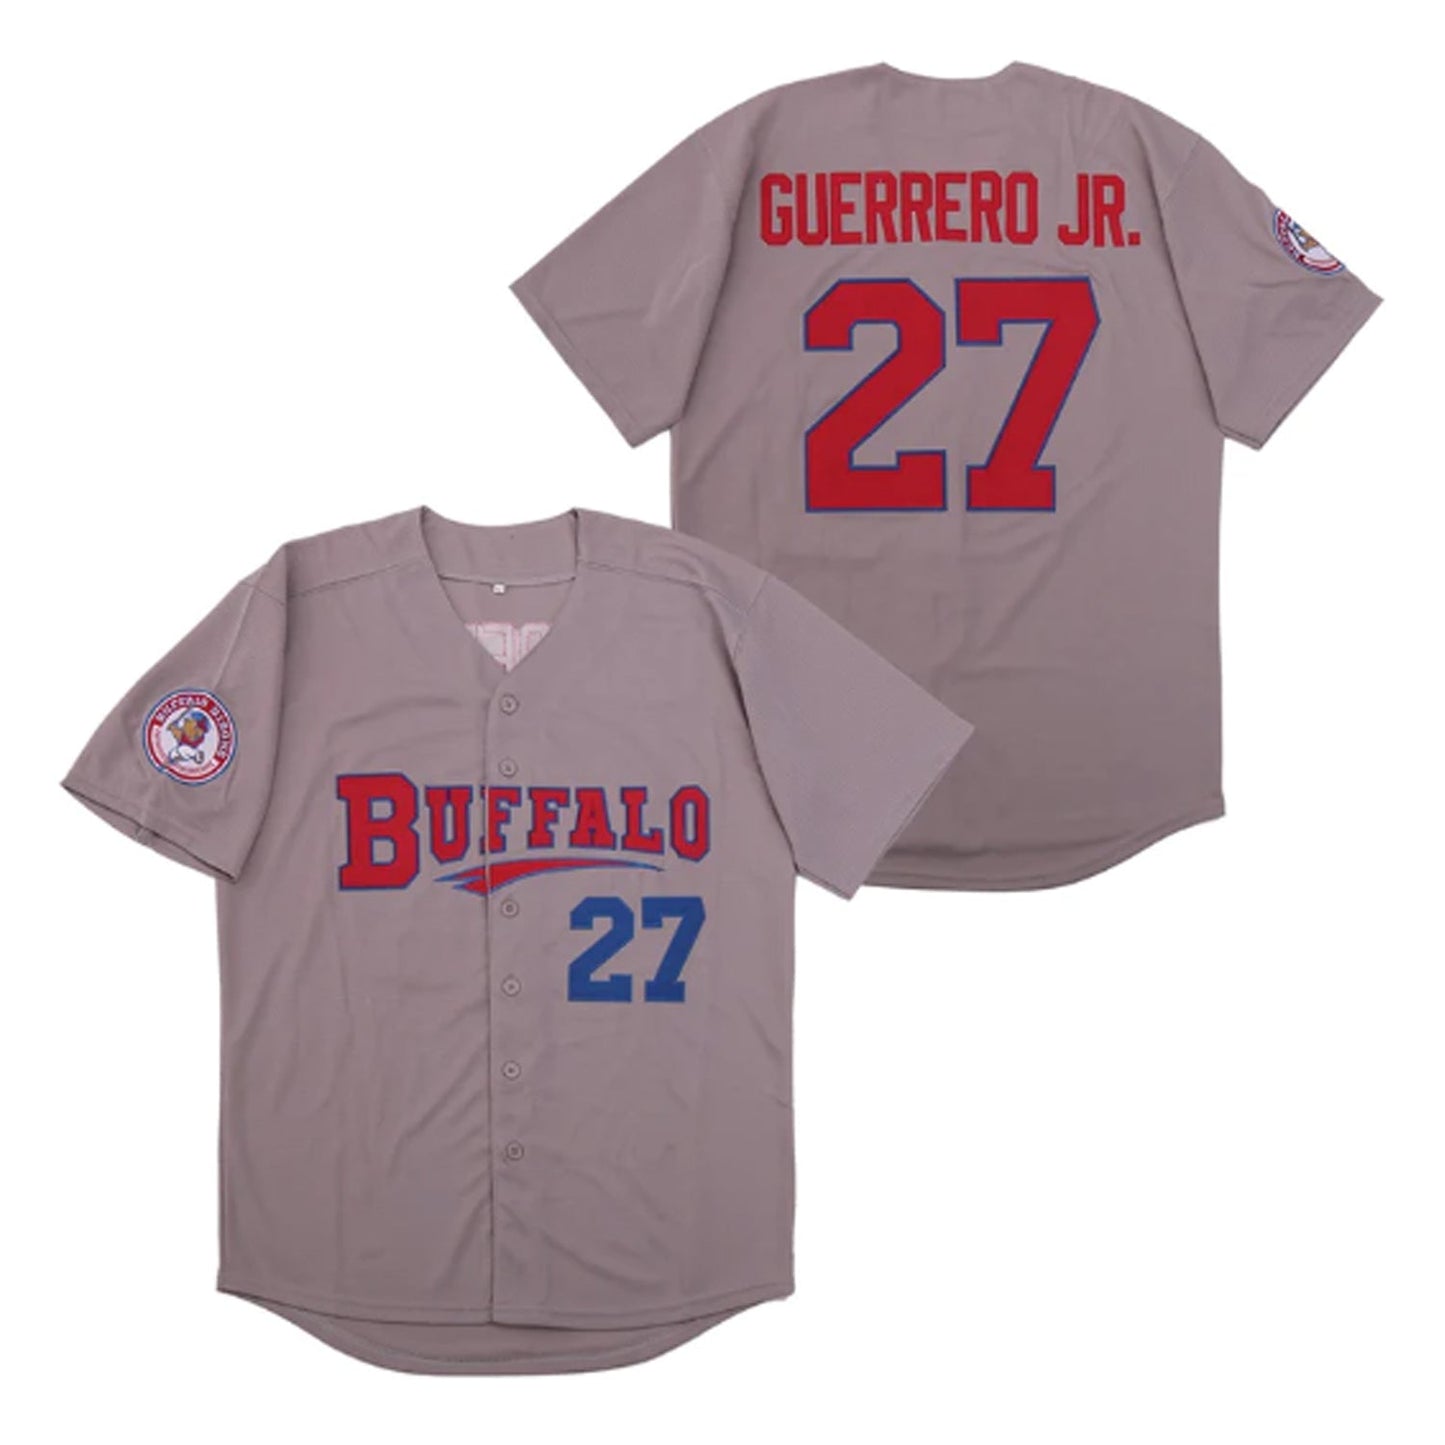 Buffalo Bisons Guerrero Jr. Baseball 27 Jersey